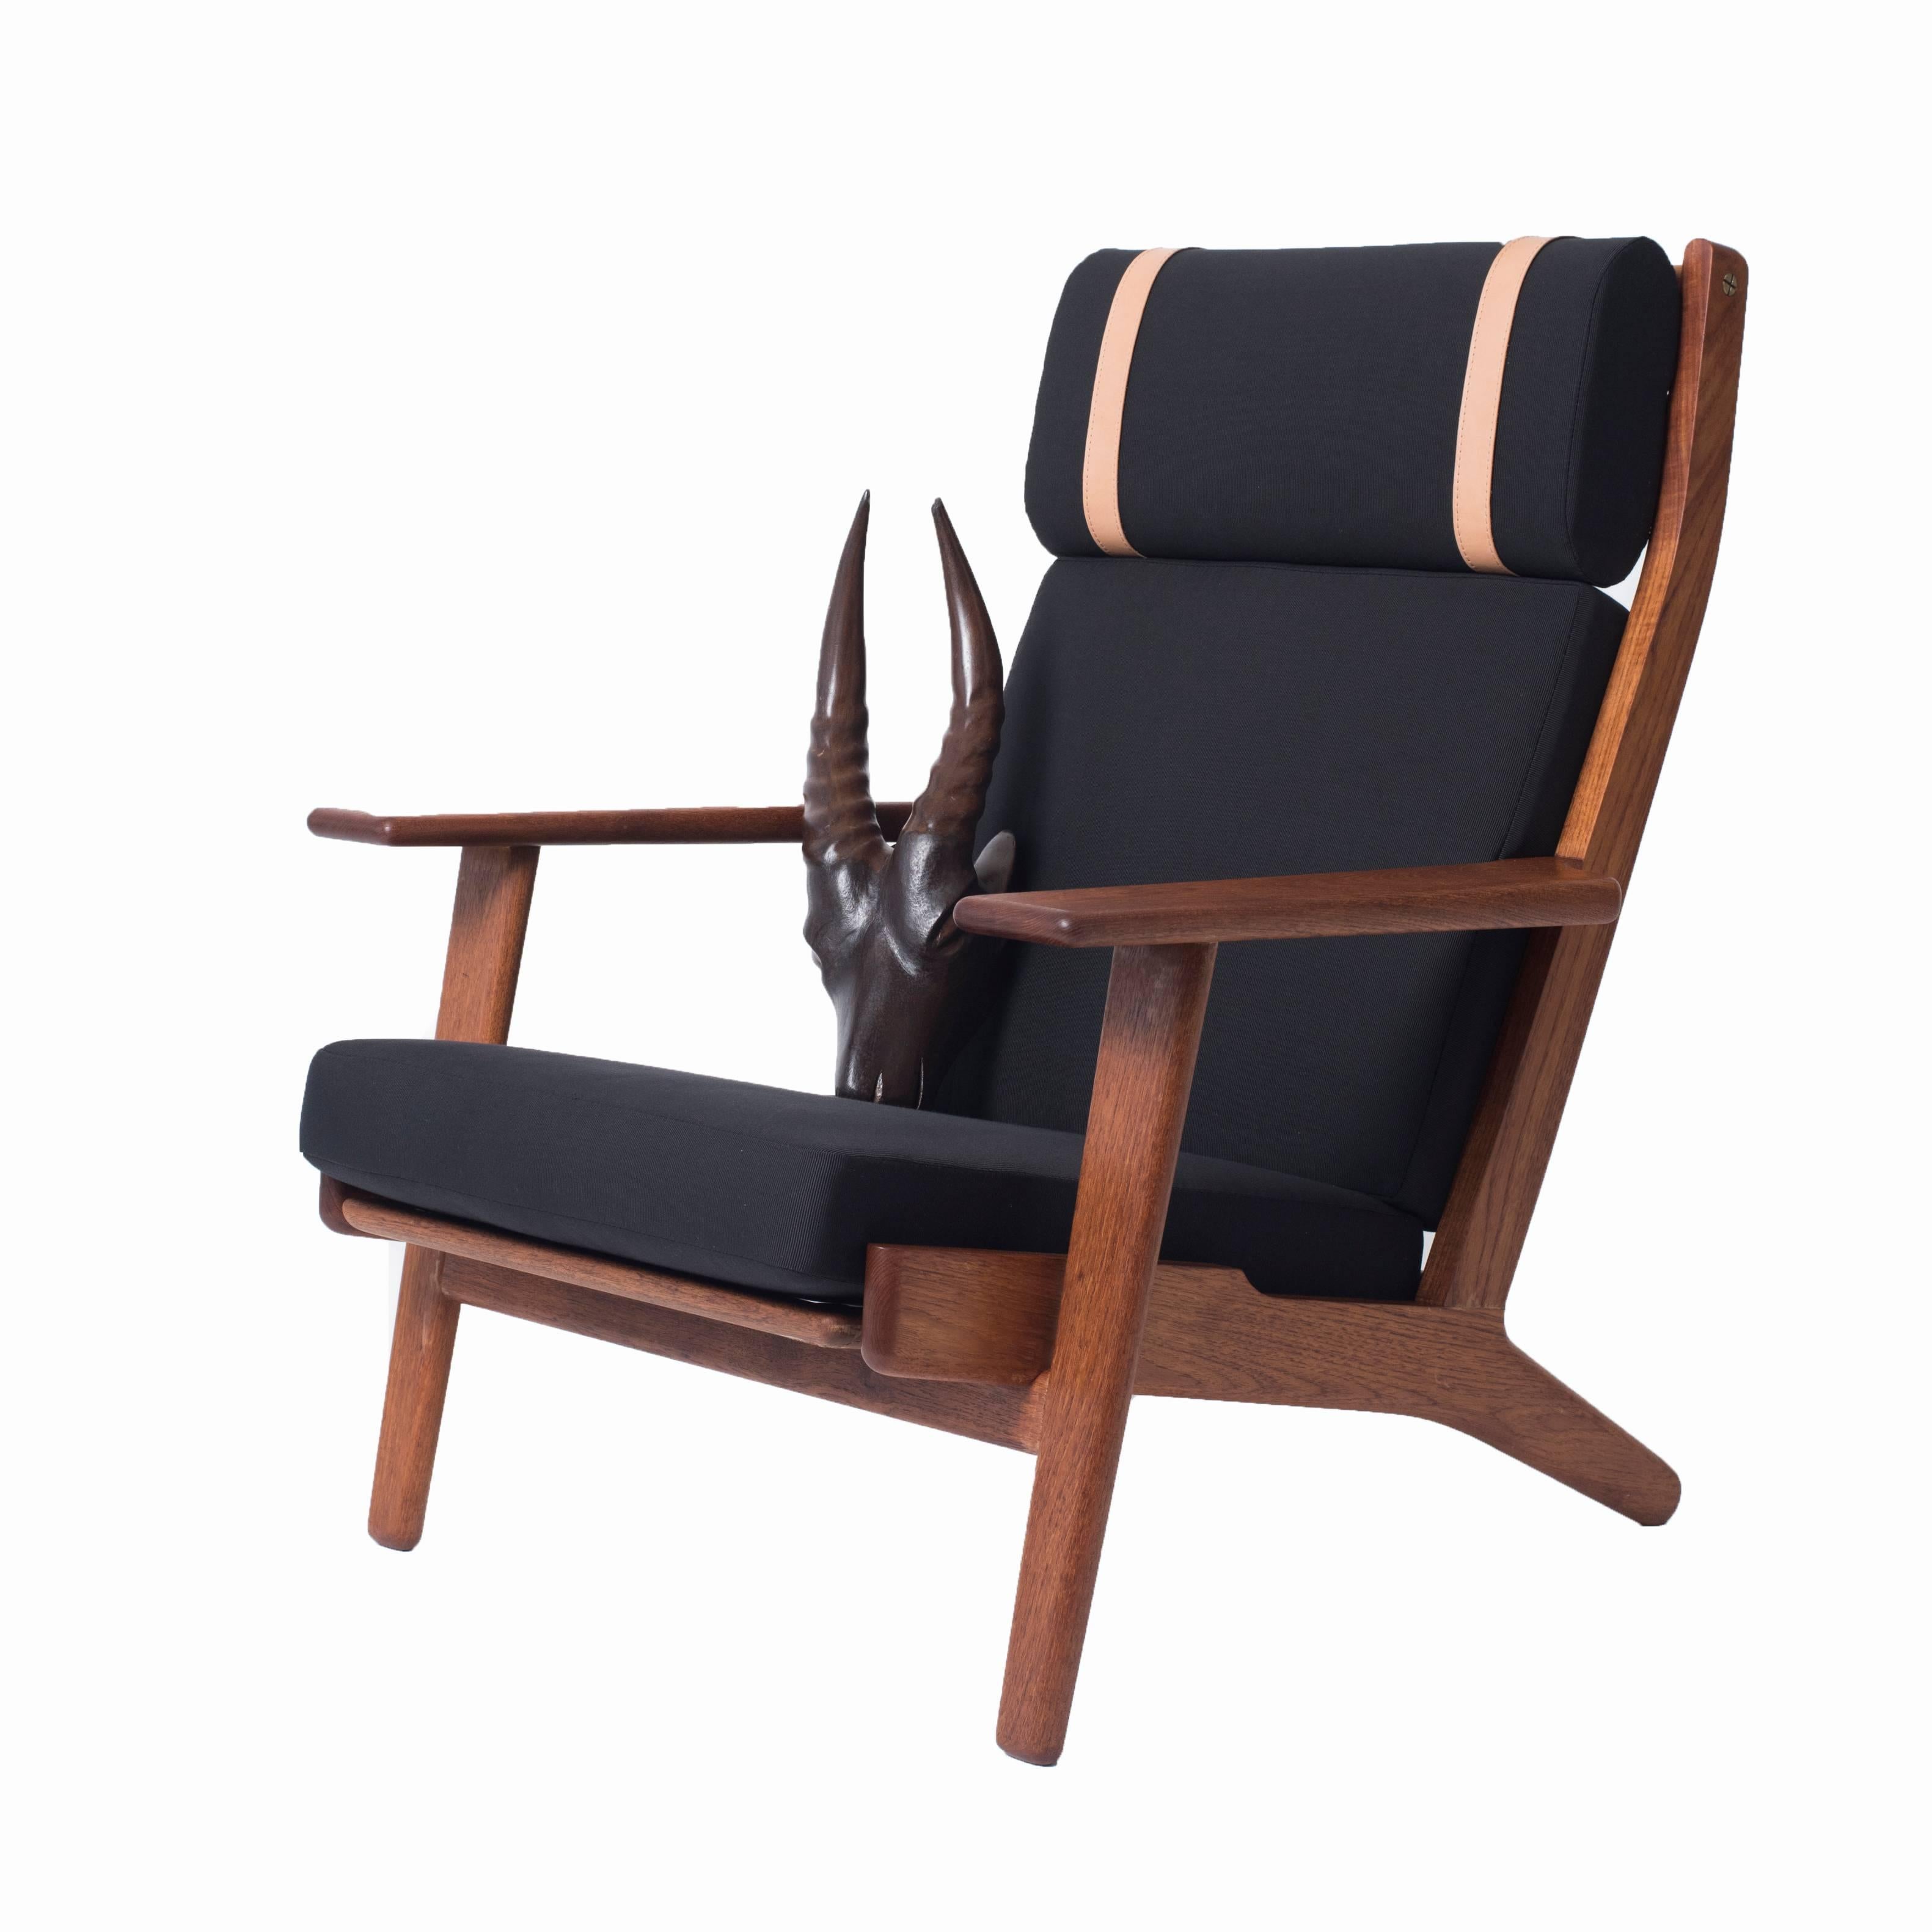 Mid-20th Century Hans Wegner High-Backed Teak Lounge Chair for GETAMA